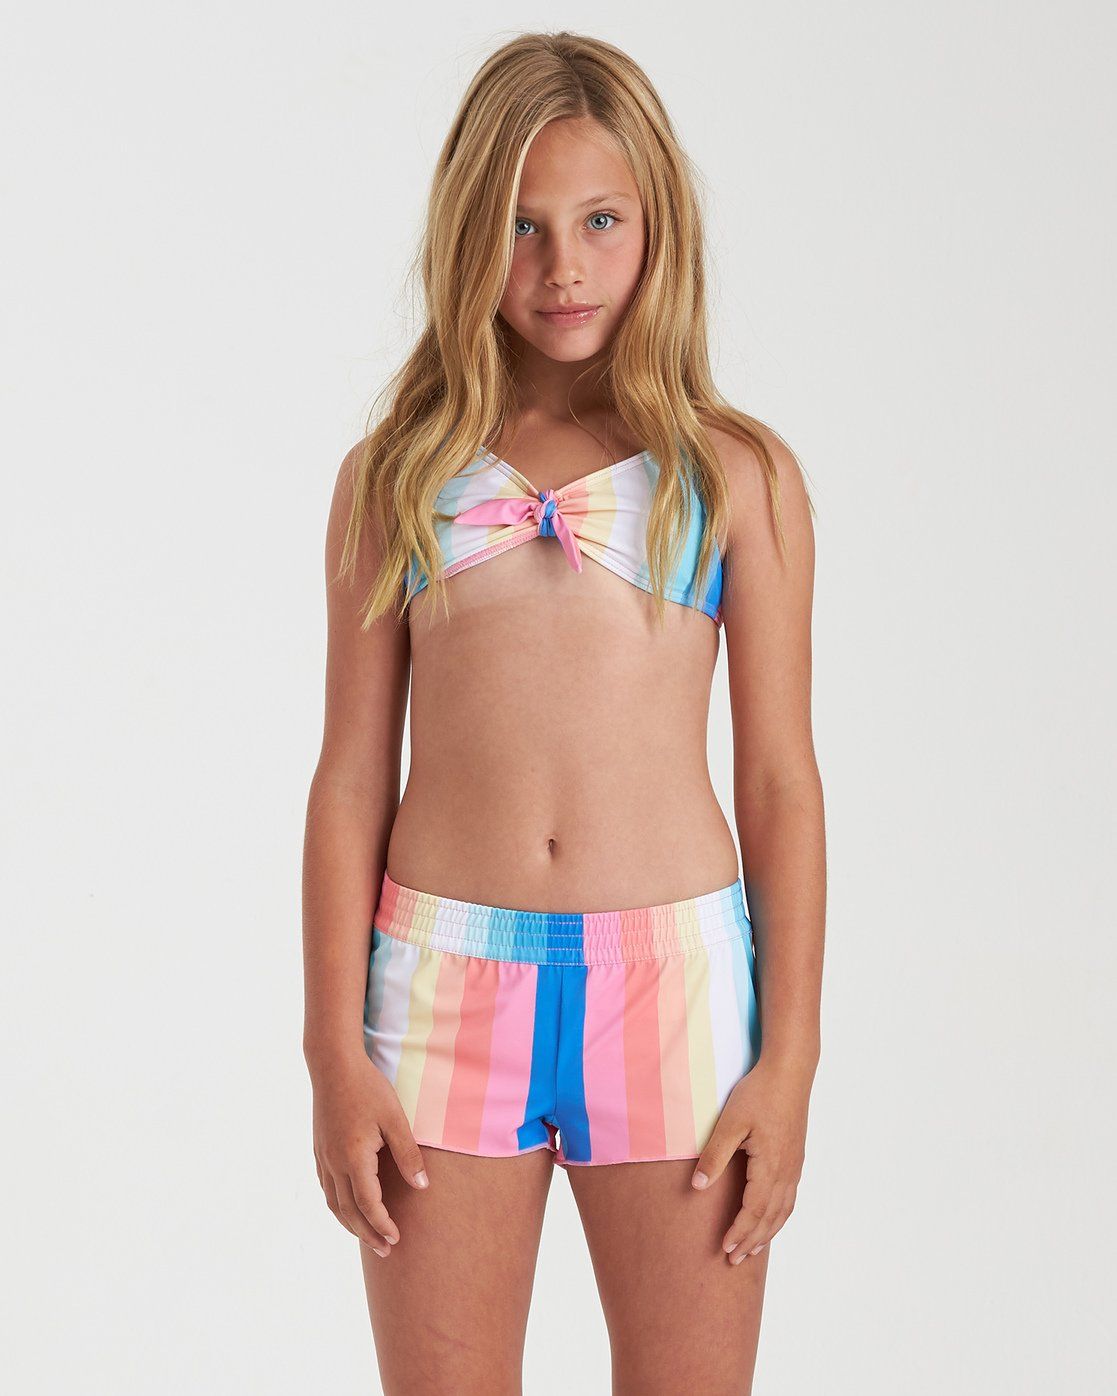  Girls 2 Piece Bikini Swimsuit Set for Tweens Size 8 Blue, Black  : Clothing, Shoes & Jewelry